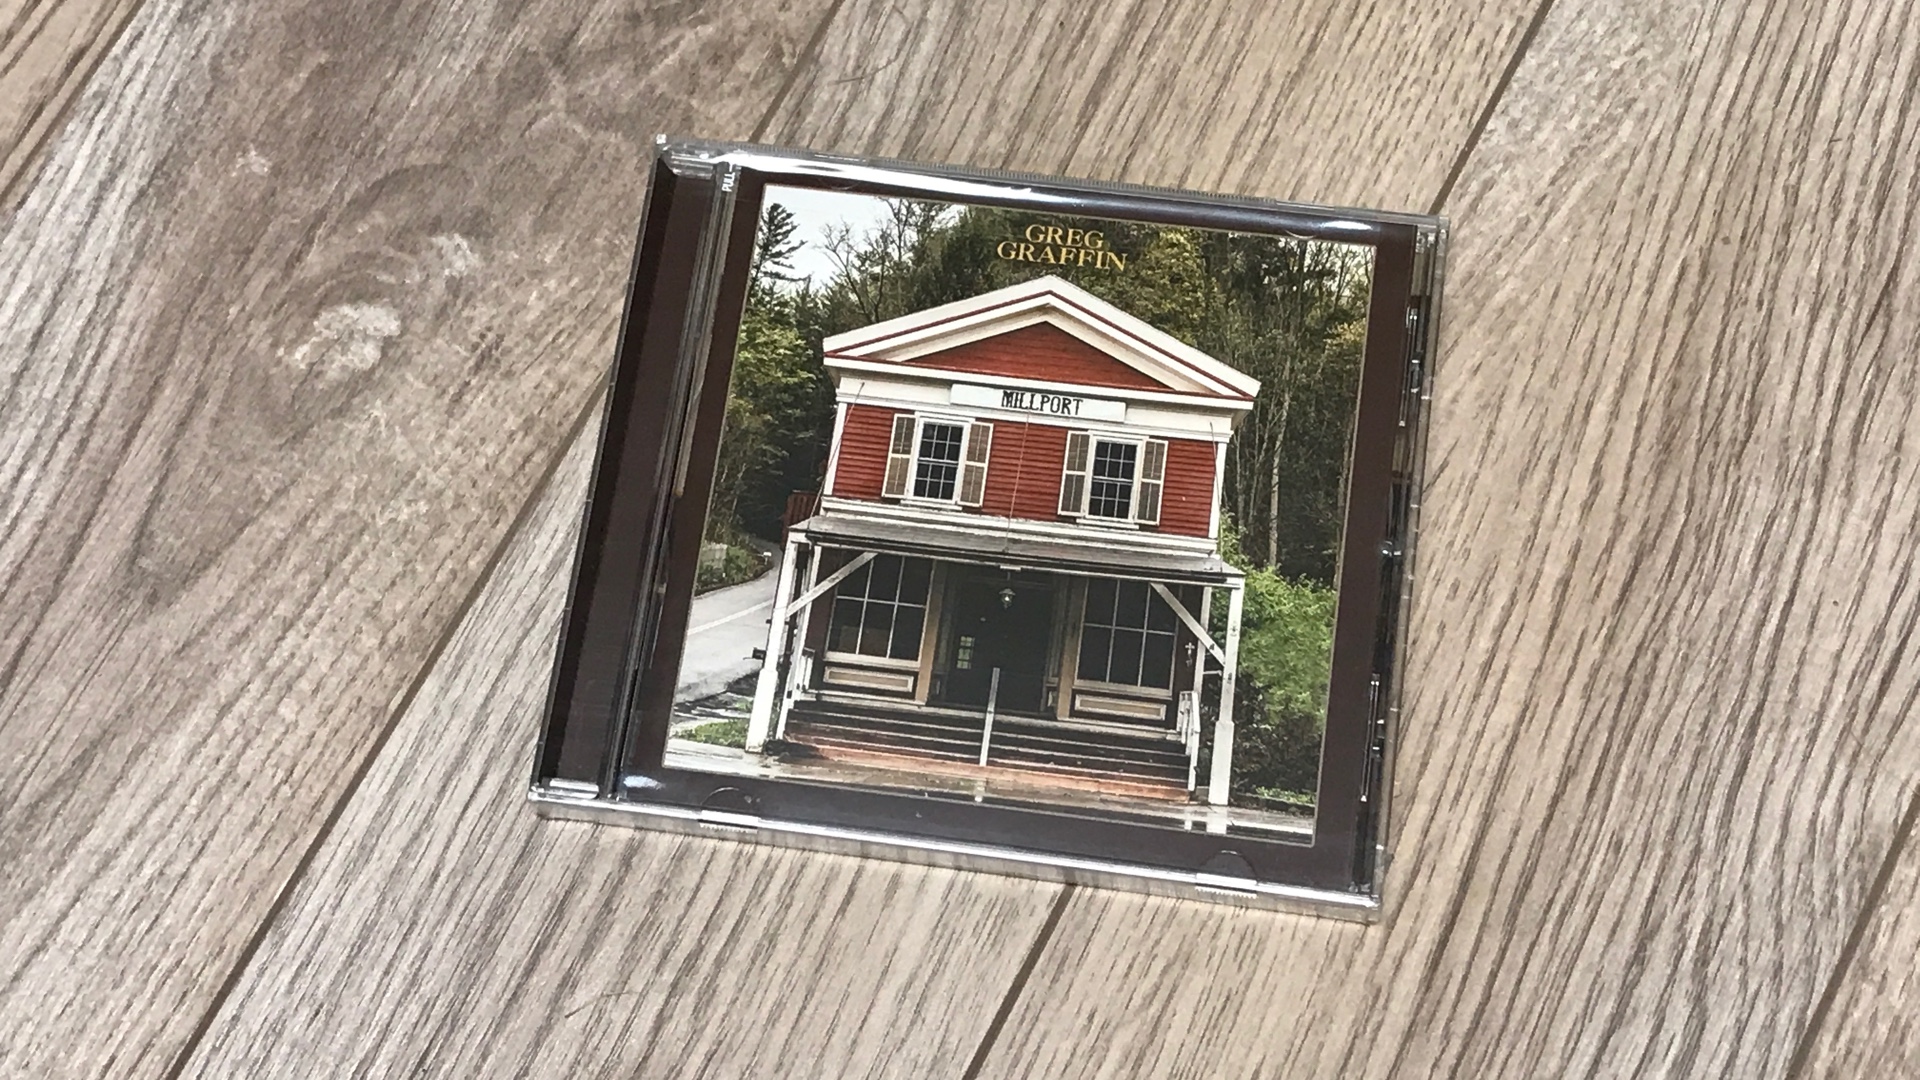 Greg Graffin Millport CD.jpg